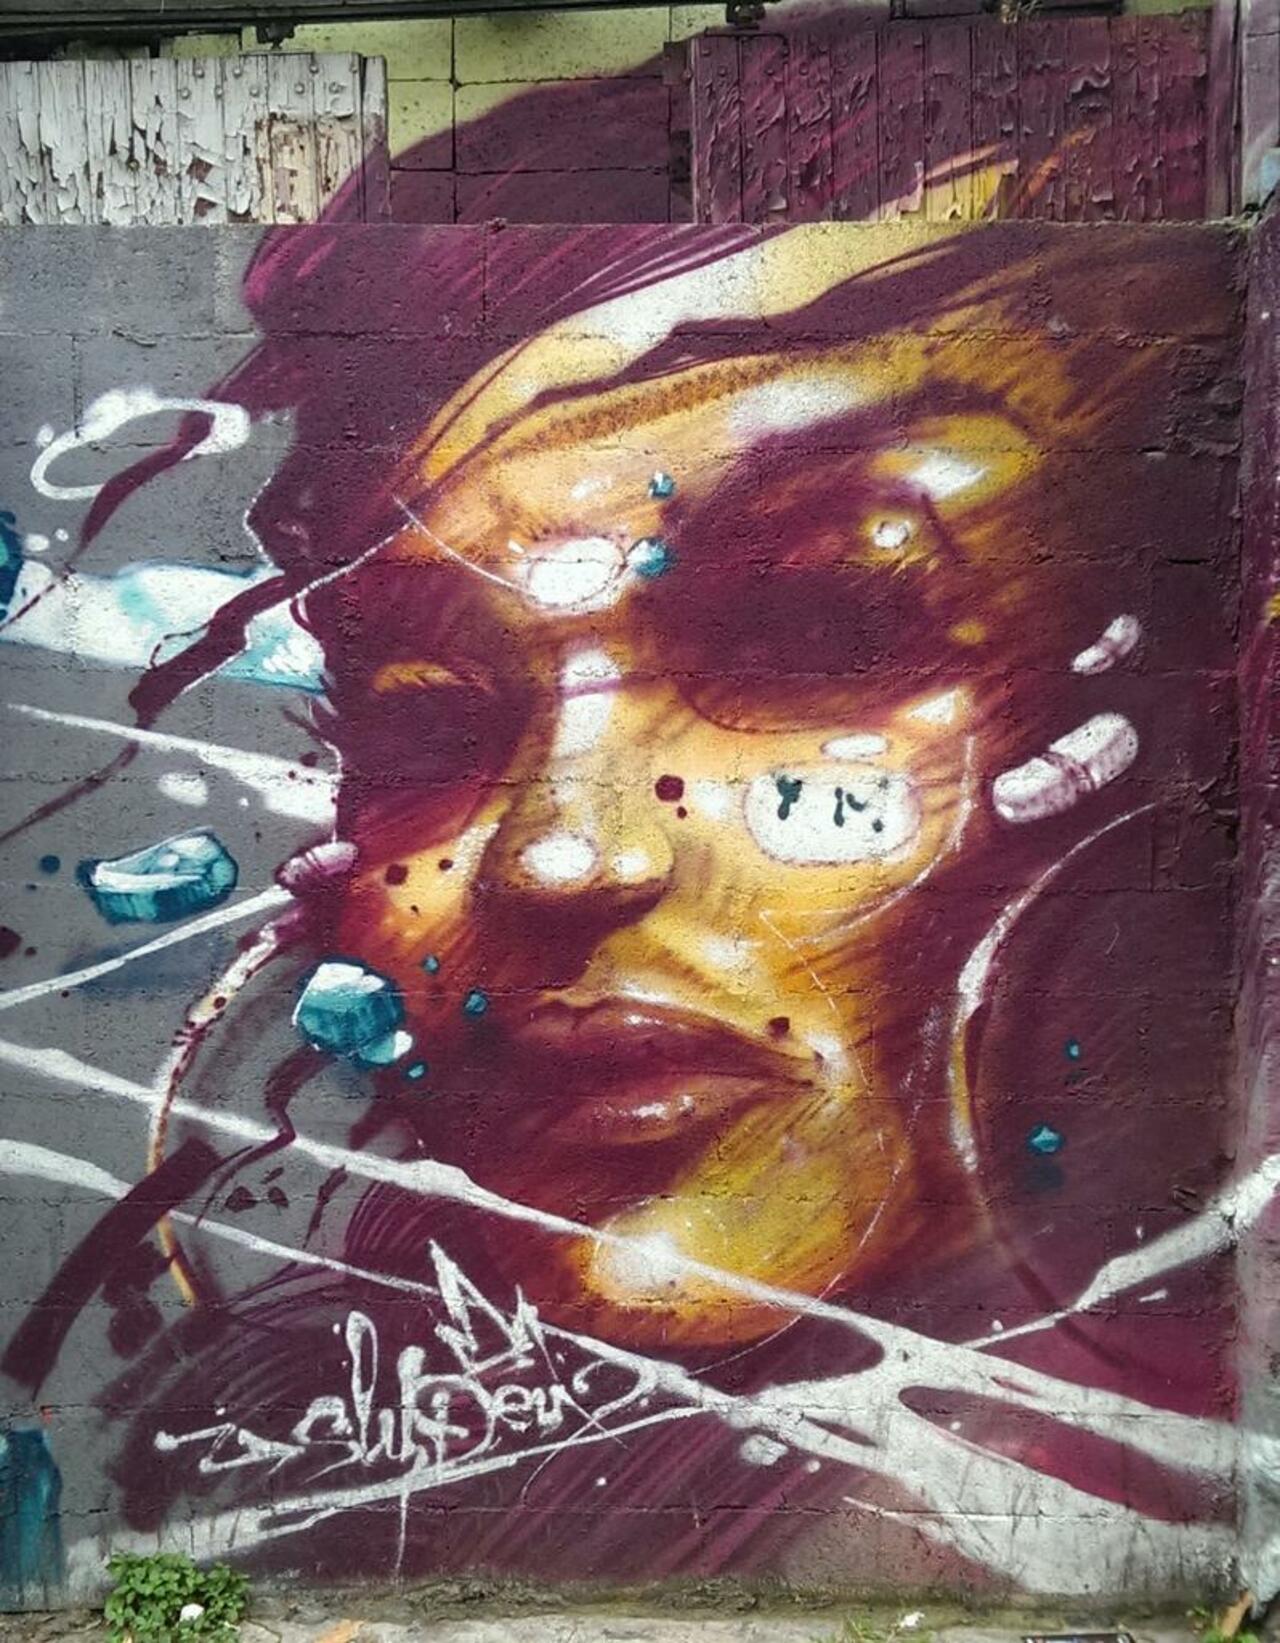 #streetart #streetarteverywhere #graffitiart #graffiti #arturbain #urbanart #painting #wall #crew #Paris #iloveparis http://t.co/77HLHuVMLN